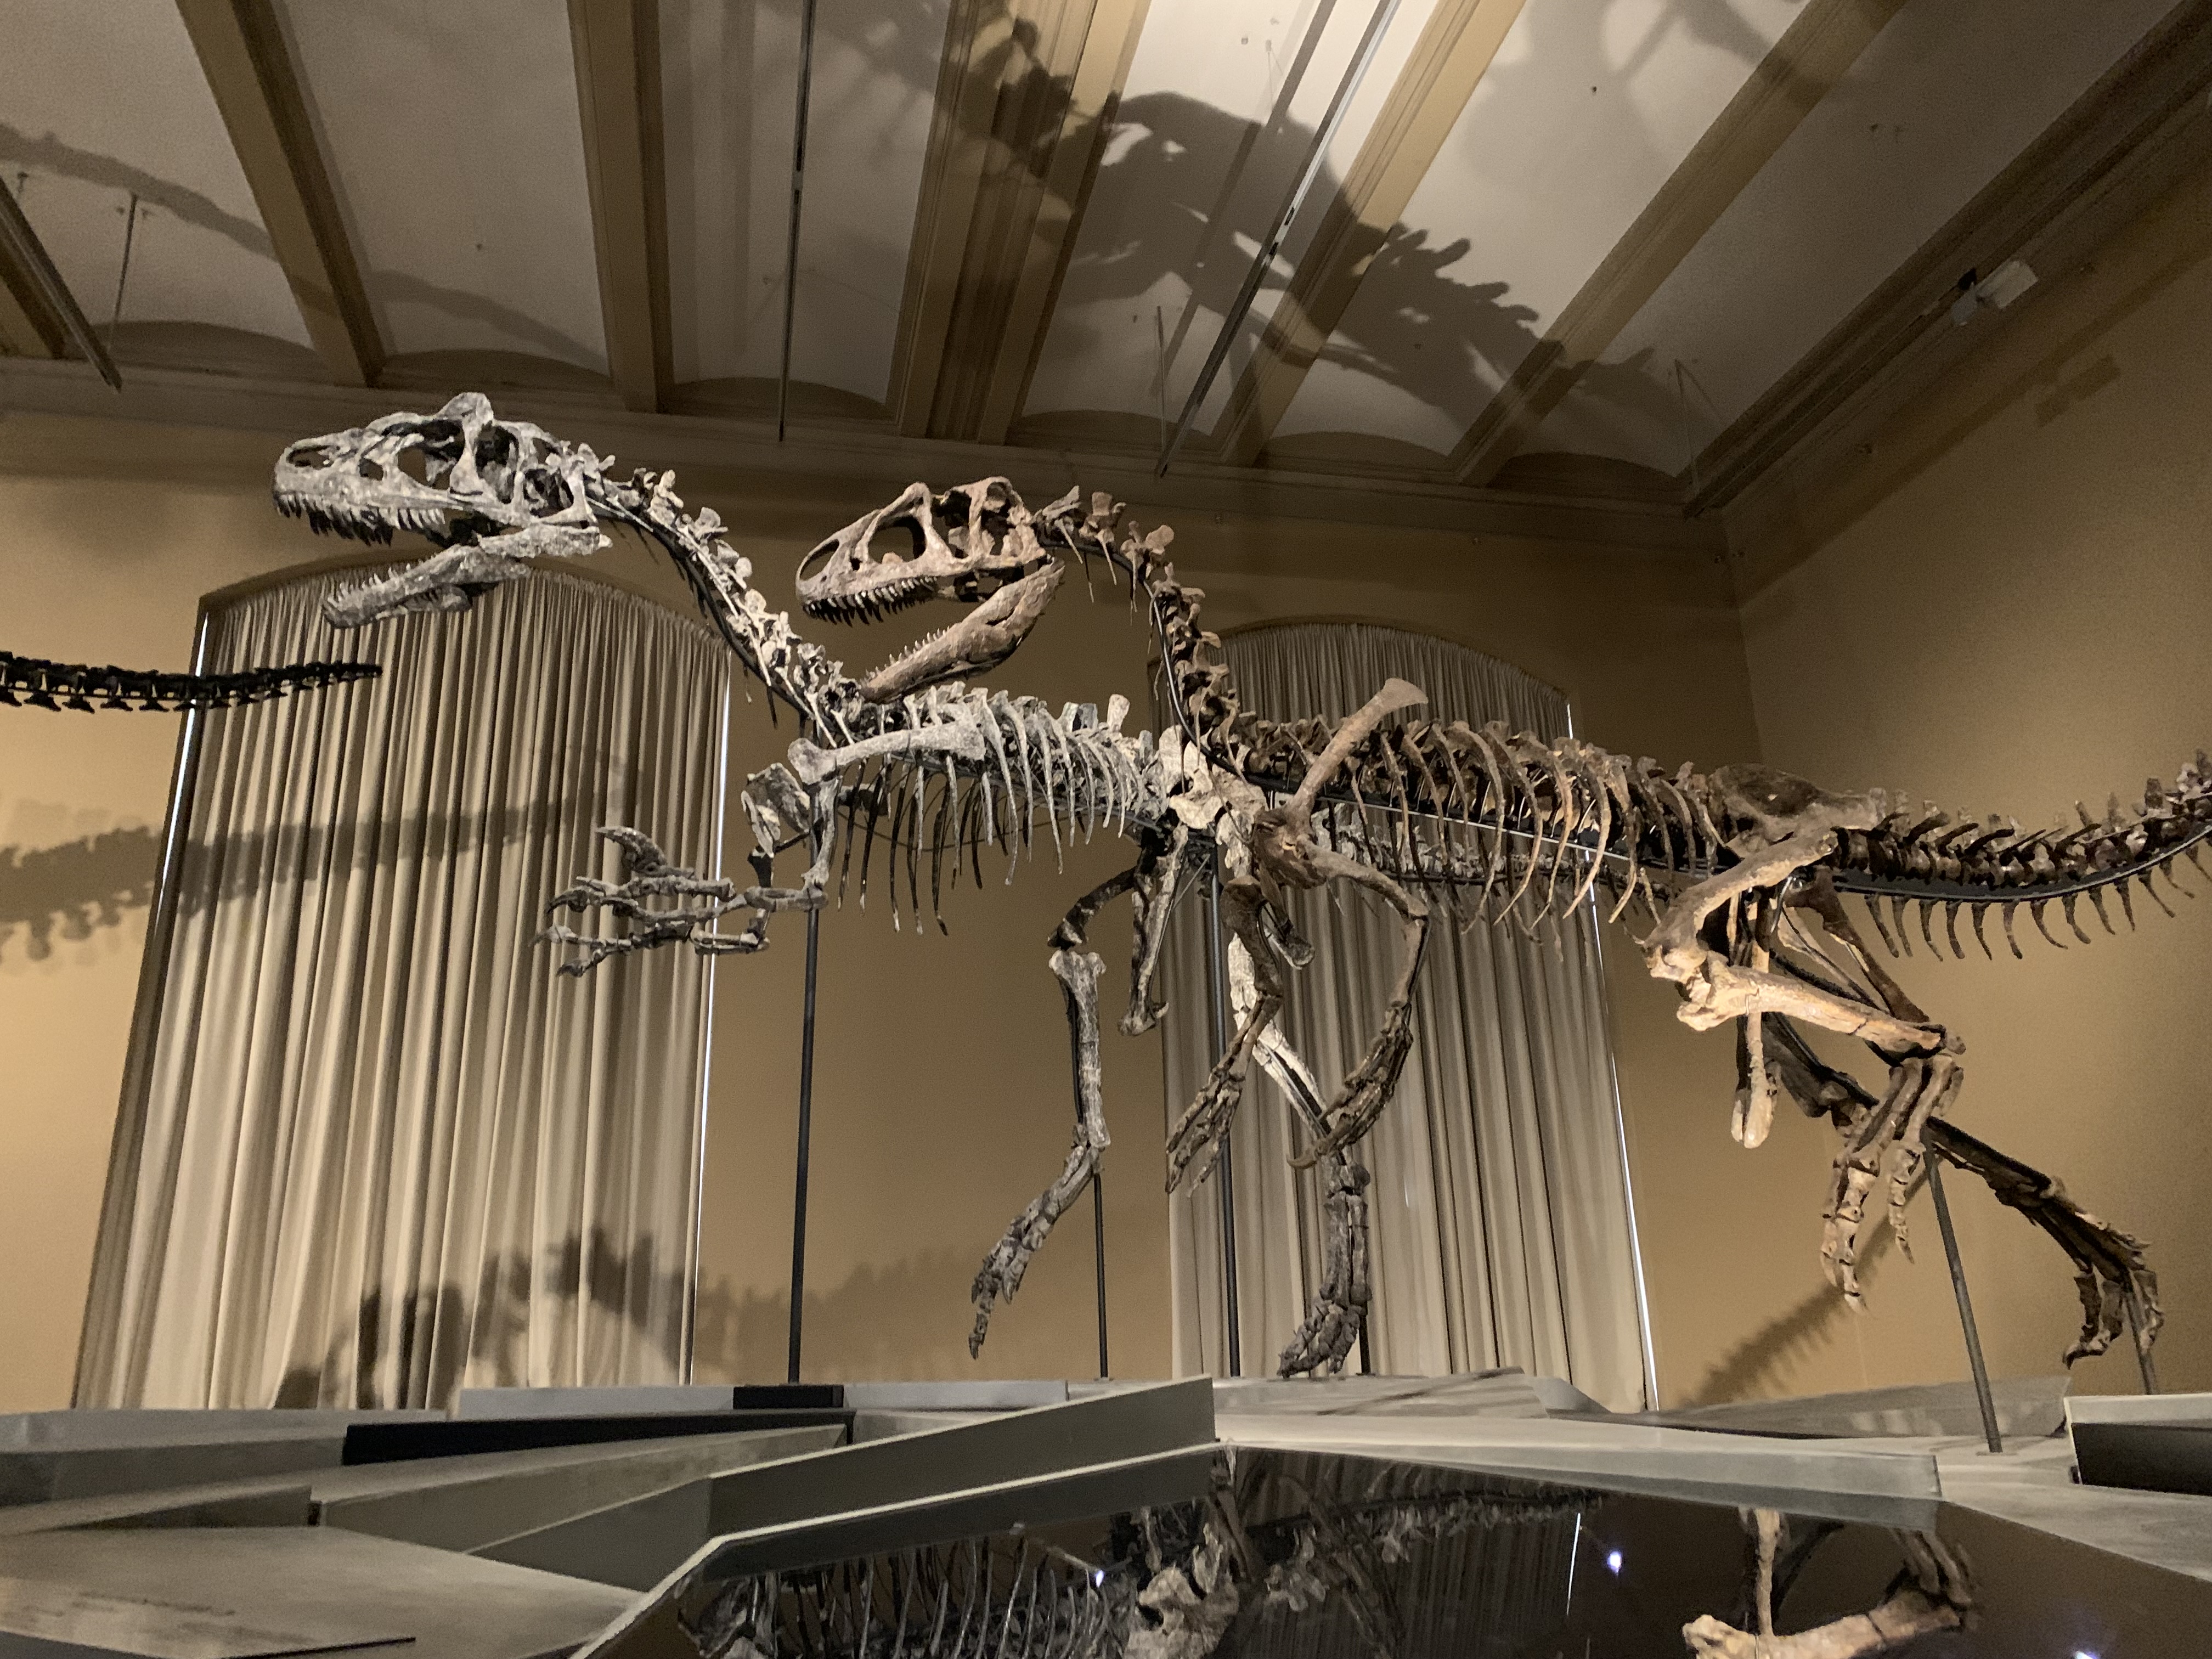 Allosaurus fragilis und Allosaurus jimmdseni im Vergleich.